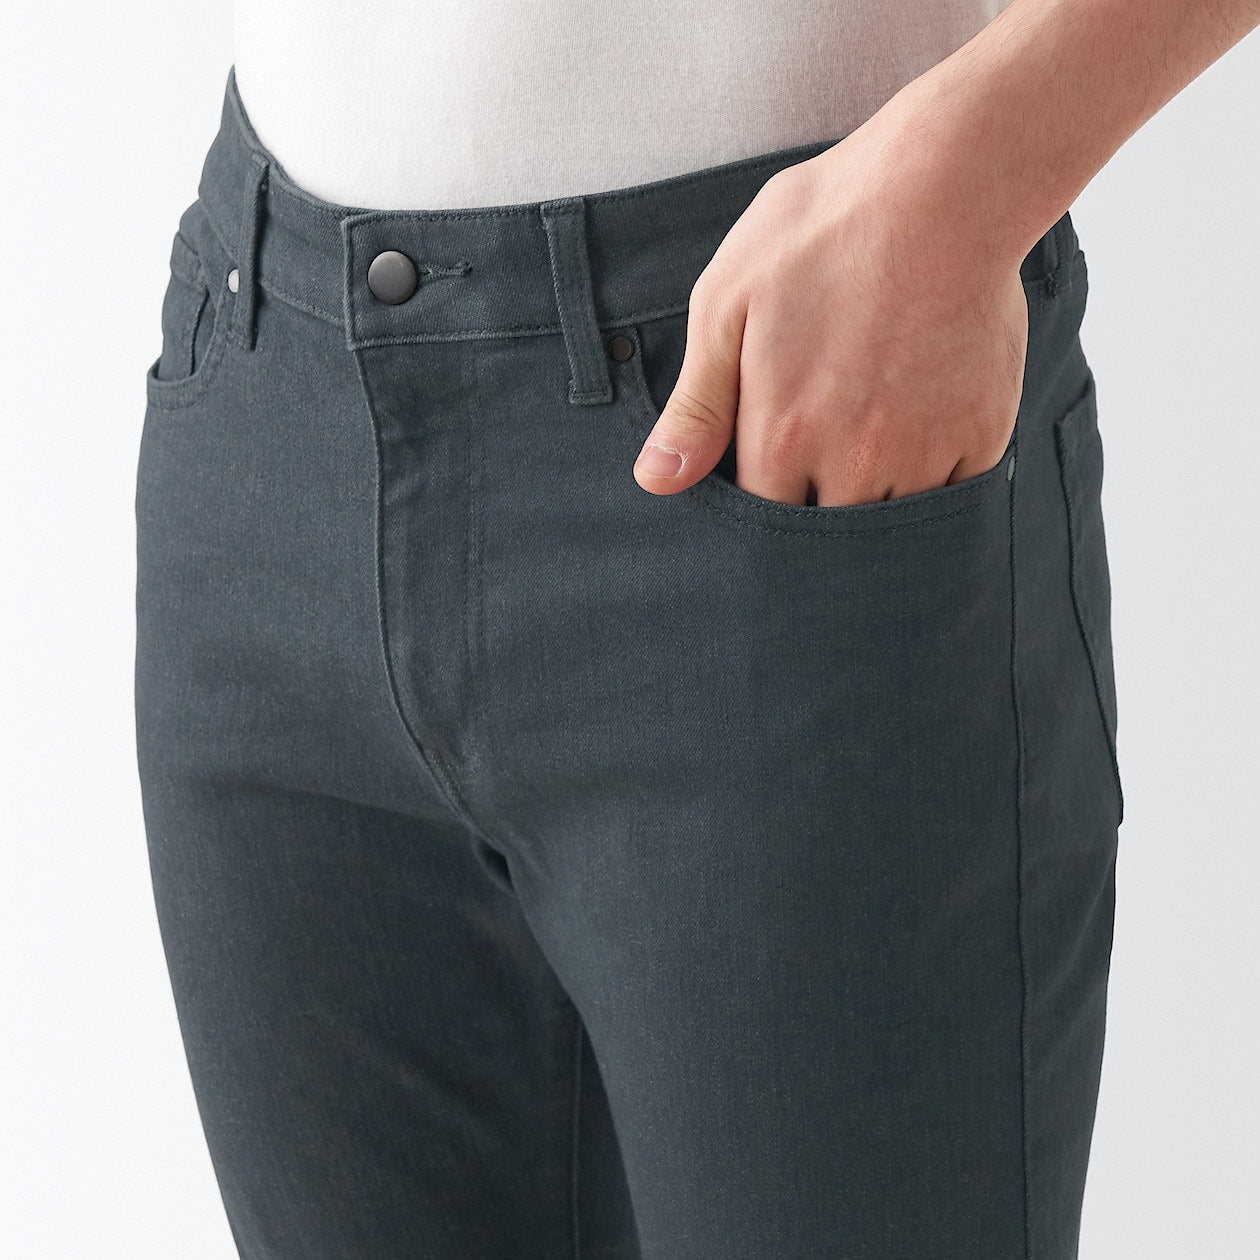 Men's Super Stretch Denim Skinny Pants Charcoal Grey (L 30inch / 76cm